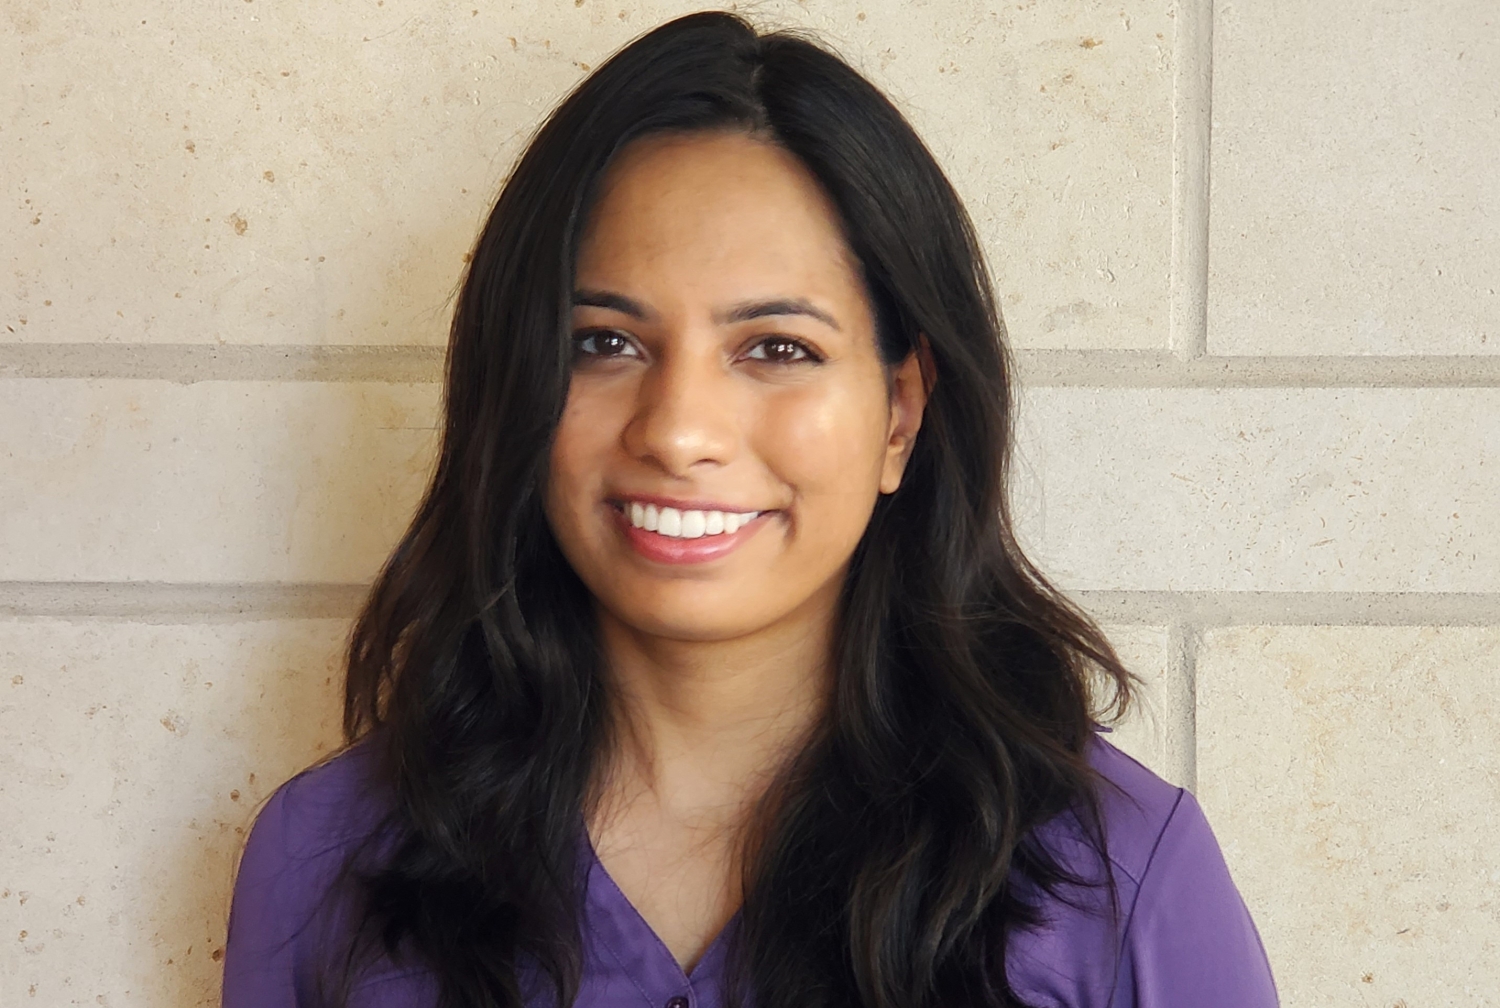 Headshot of a medical student wearing a purple shirt